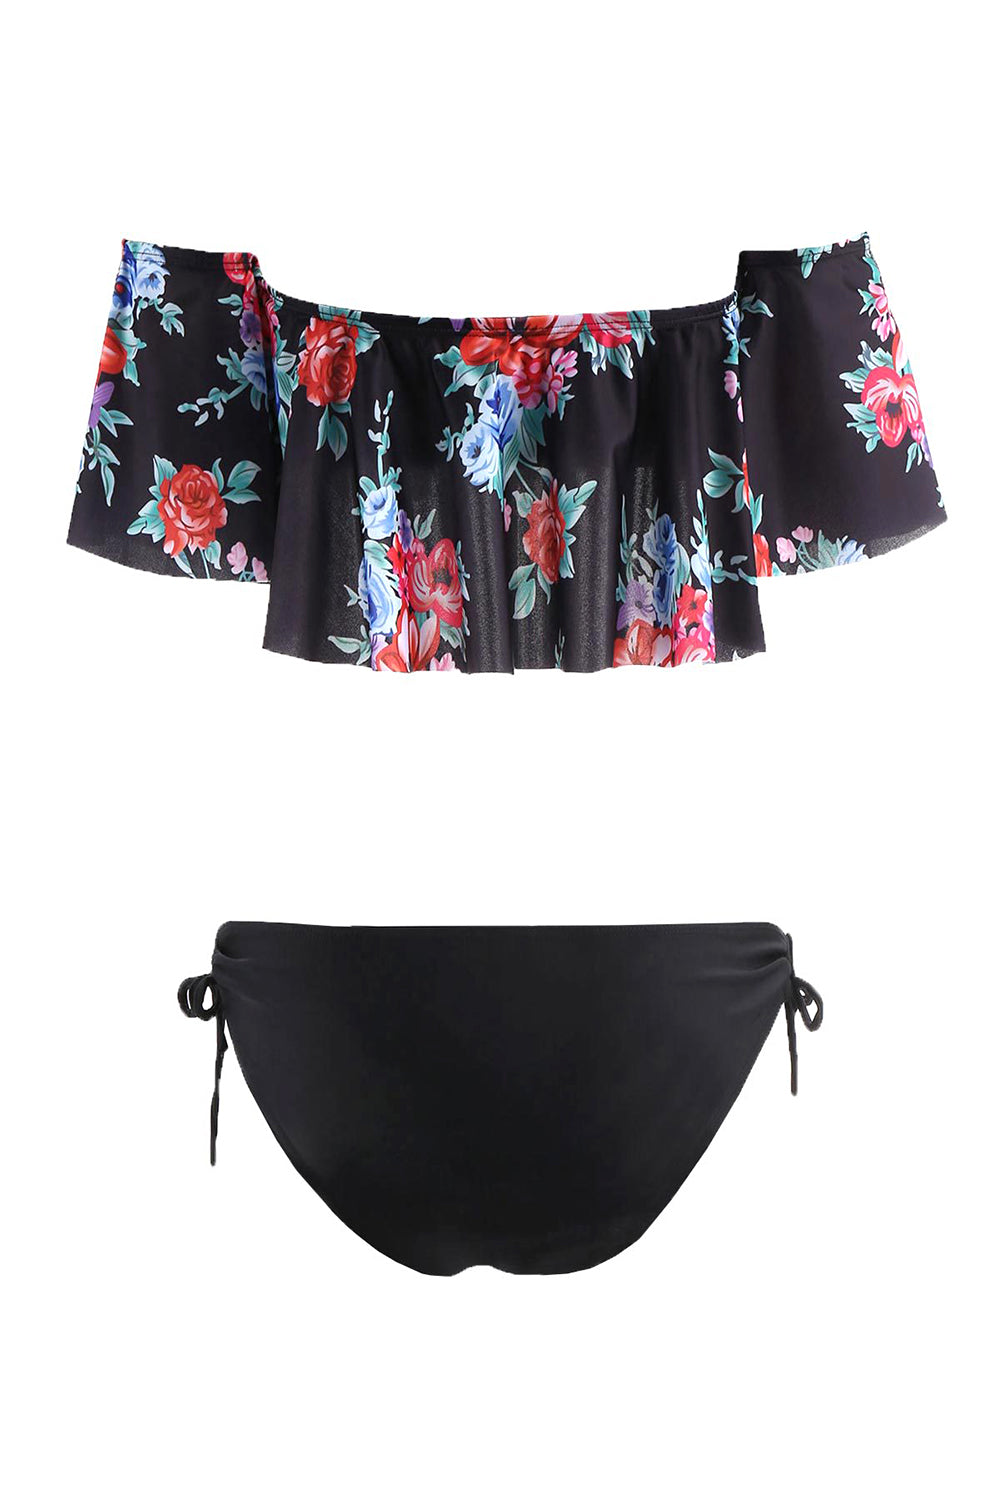 Iyasson Flower Printing Falbala Bikini Top With Black Ties at bottom s